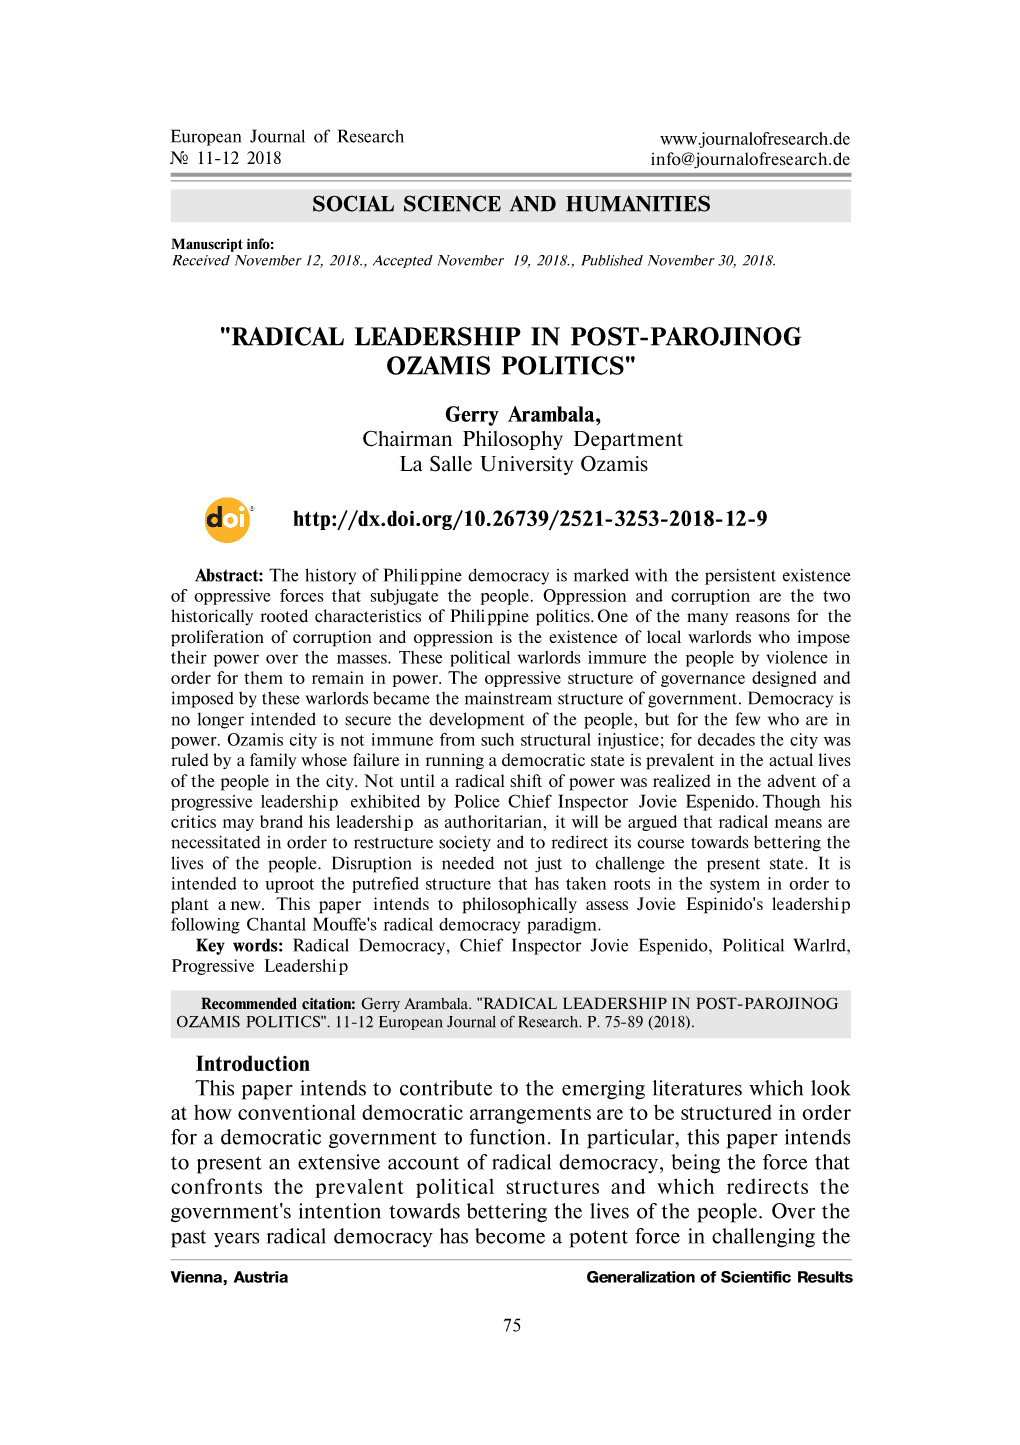 "Radical Leadership in Post-Parojinog Ozamis Politics"